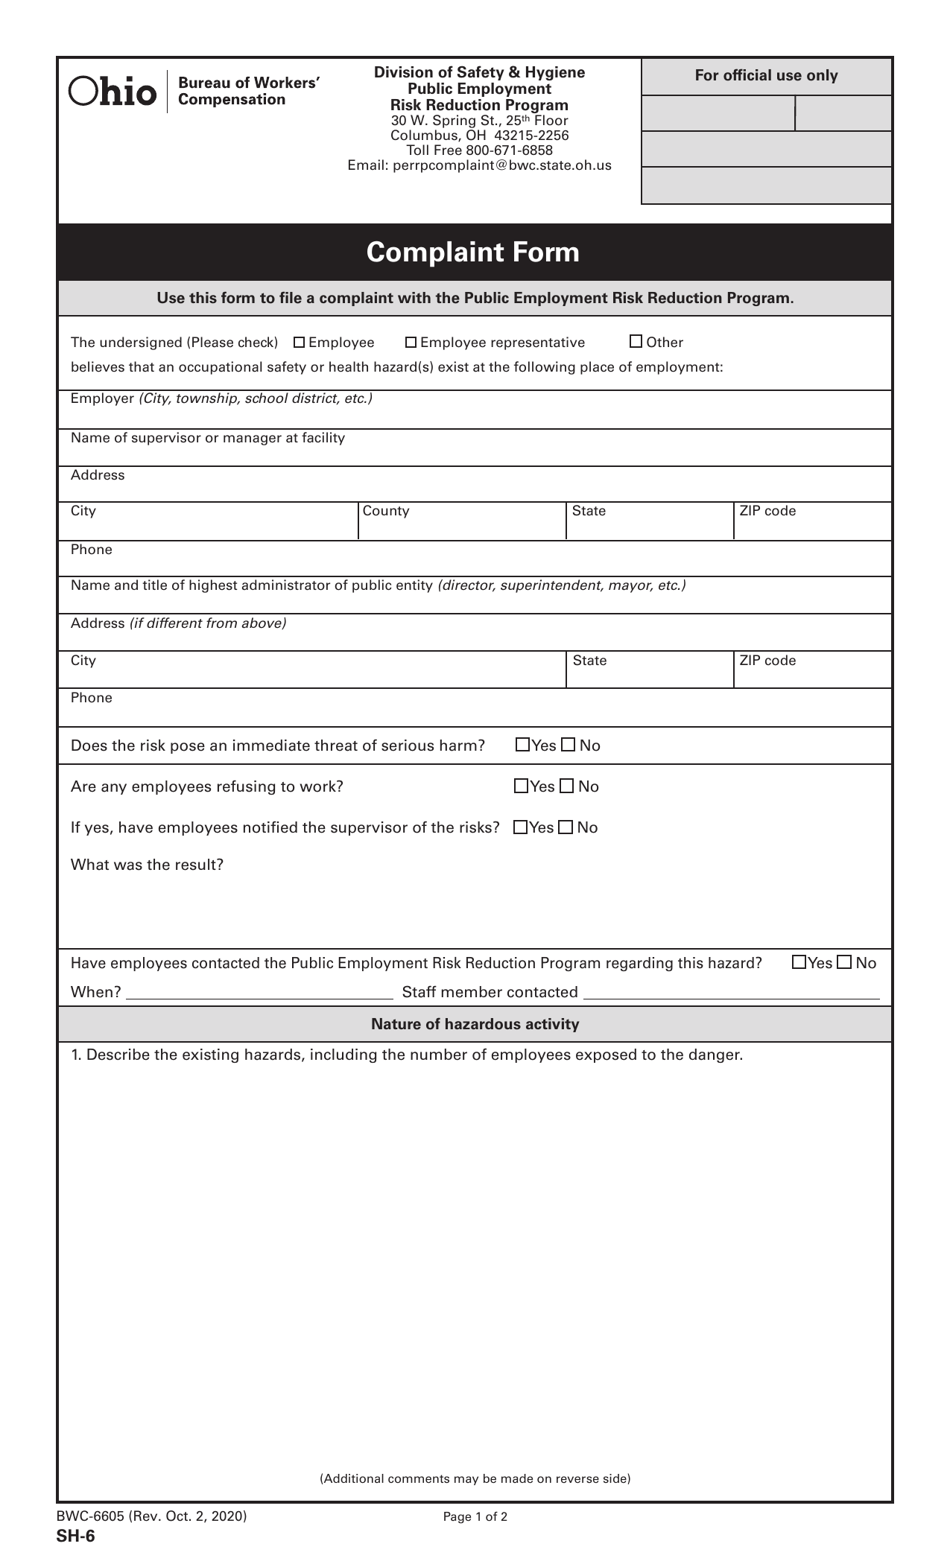 Form SH-6 (BWC-6605) Complaint Form - Ohio, Page 1